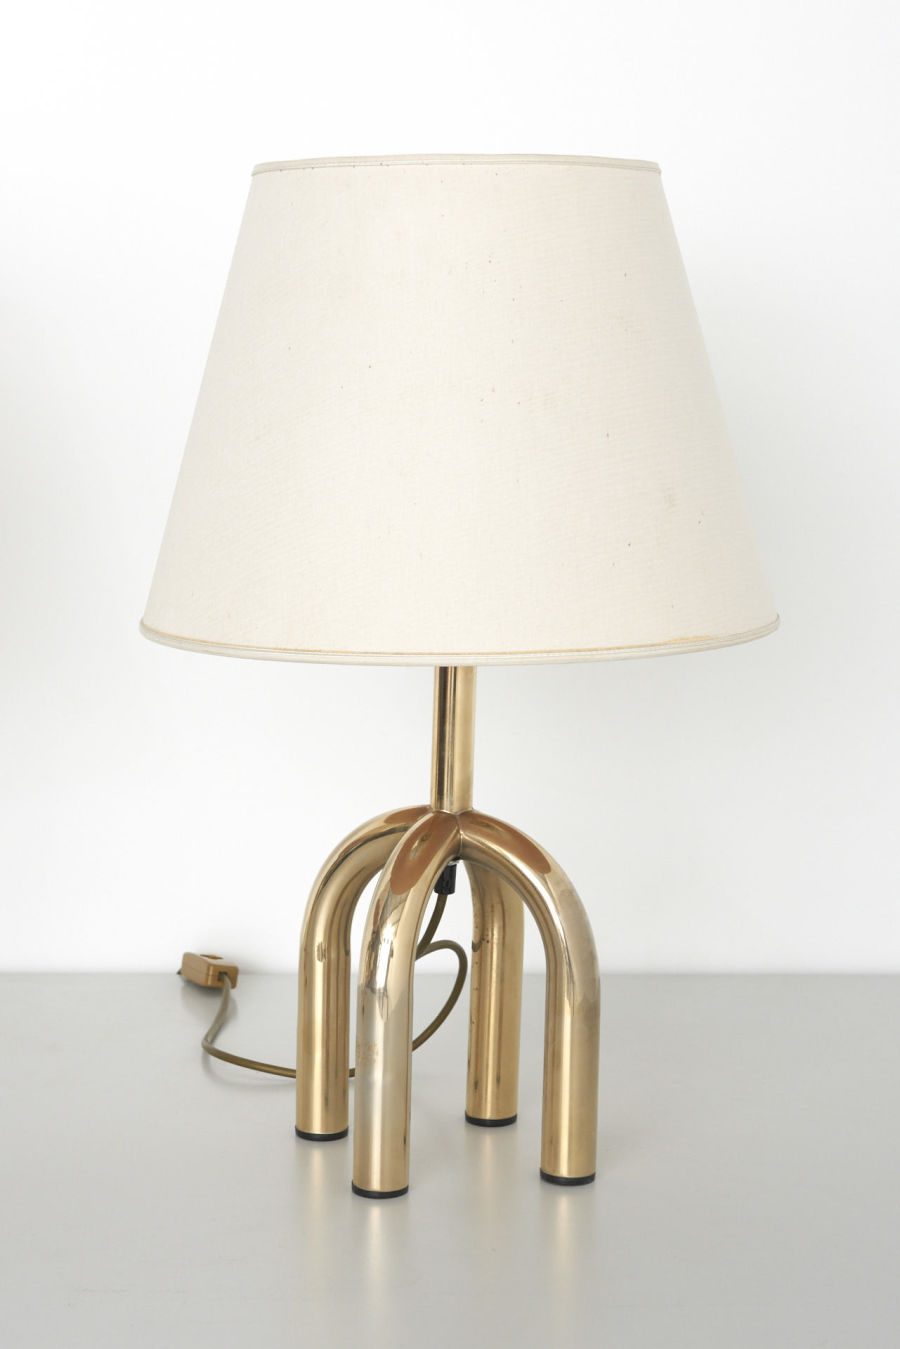 modestfurniture-vintage-2285-pair-table-lamps-4-brass-legs08